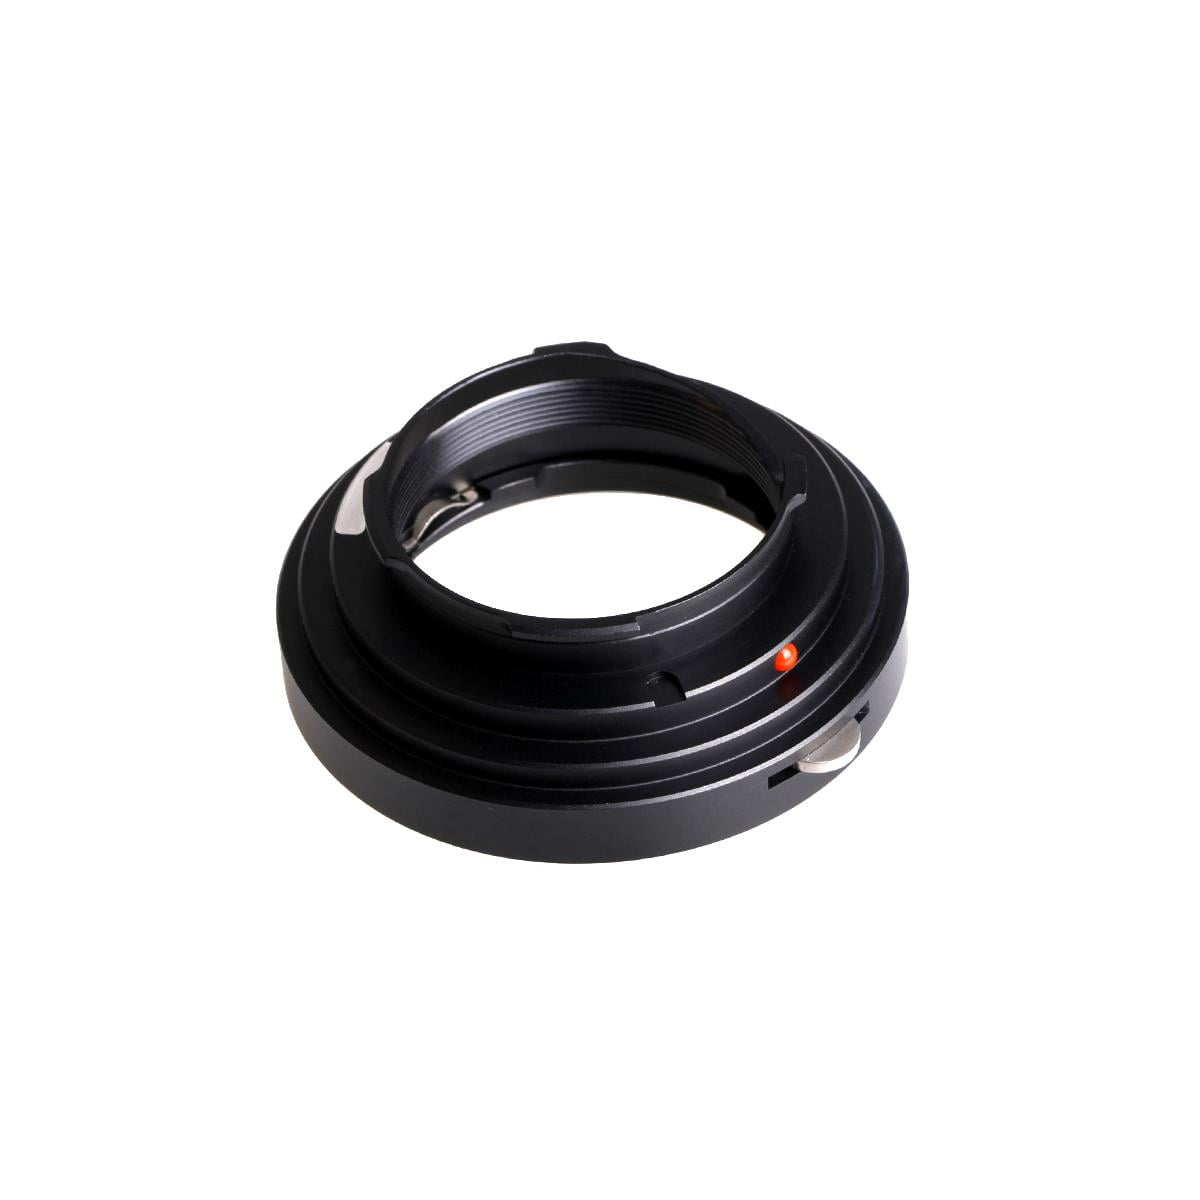 Kipon Adapter for Sony Alpha/Minolat AF Mount Lens to Rangefinder Live View Leica M Typ 240 Camera